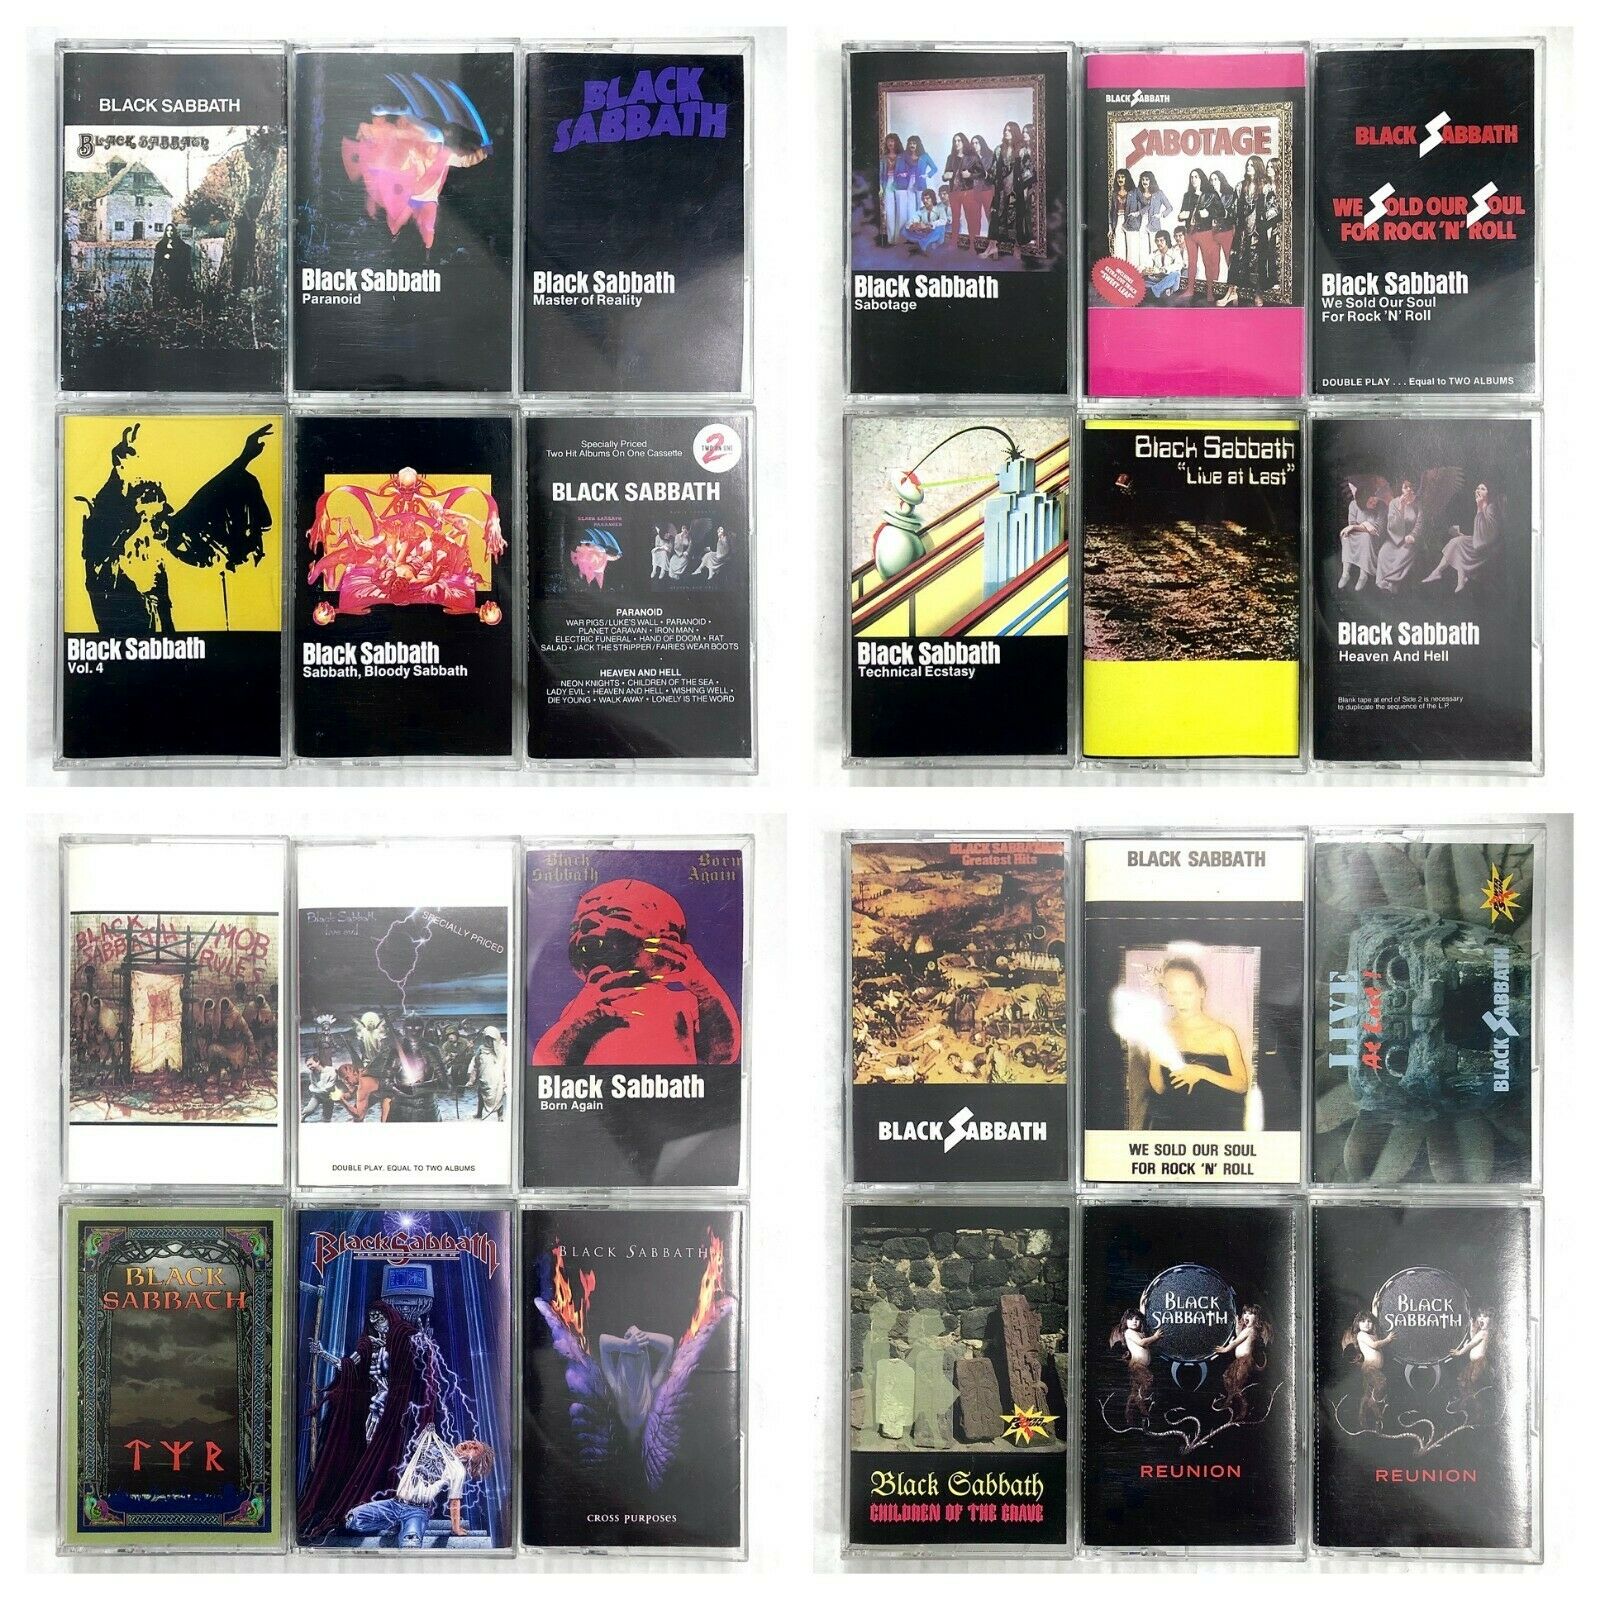 Build Ur Own Metal Cassette Tape Lot - Black Sabbath, Maiden, Metallica + More!